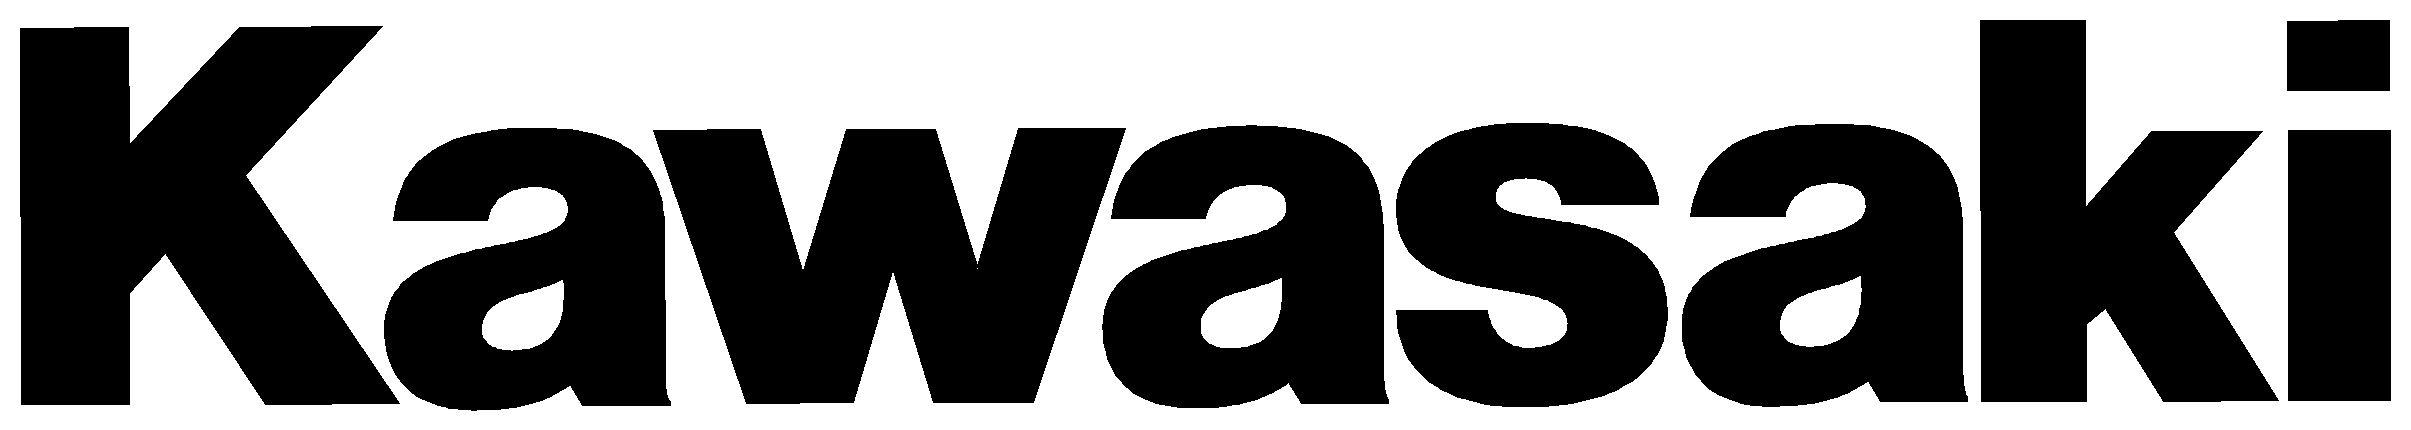 Black Kawasaki Logo - Kawasaki Logos